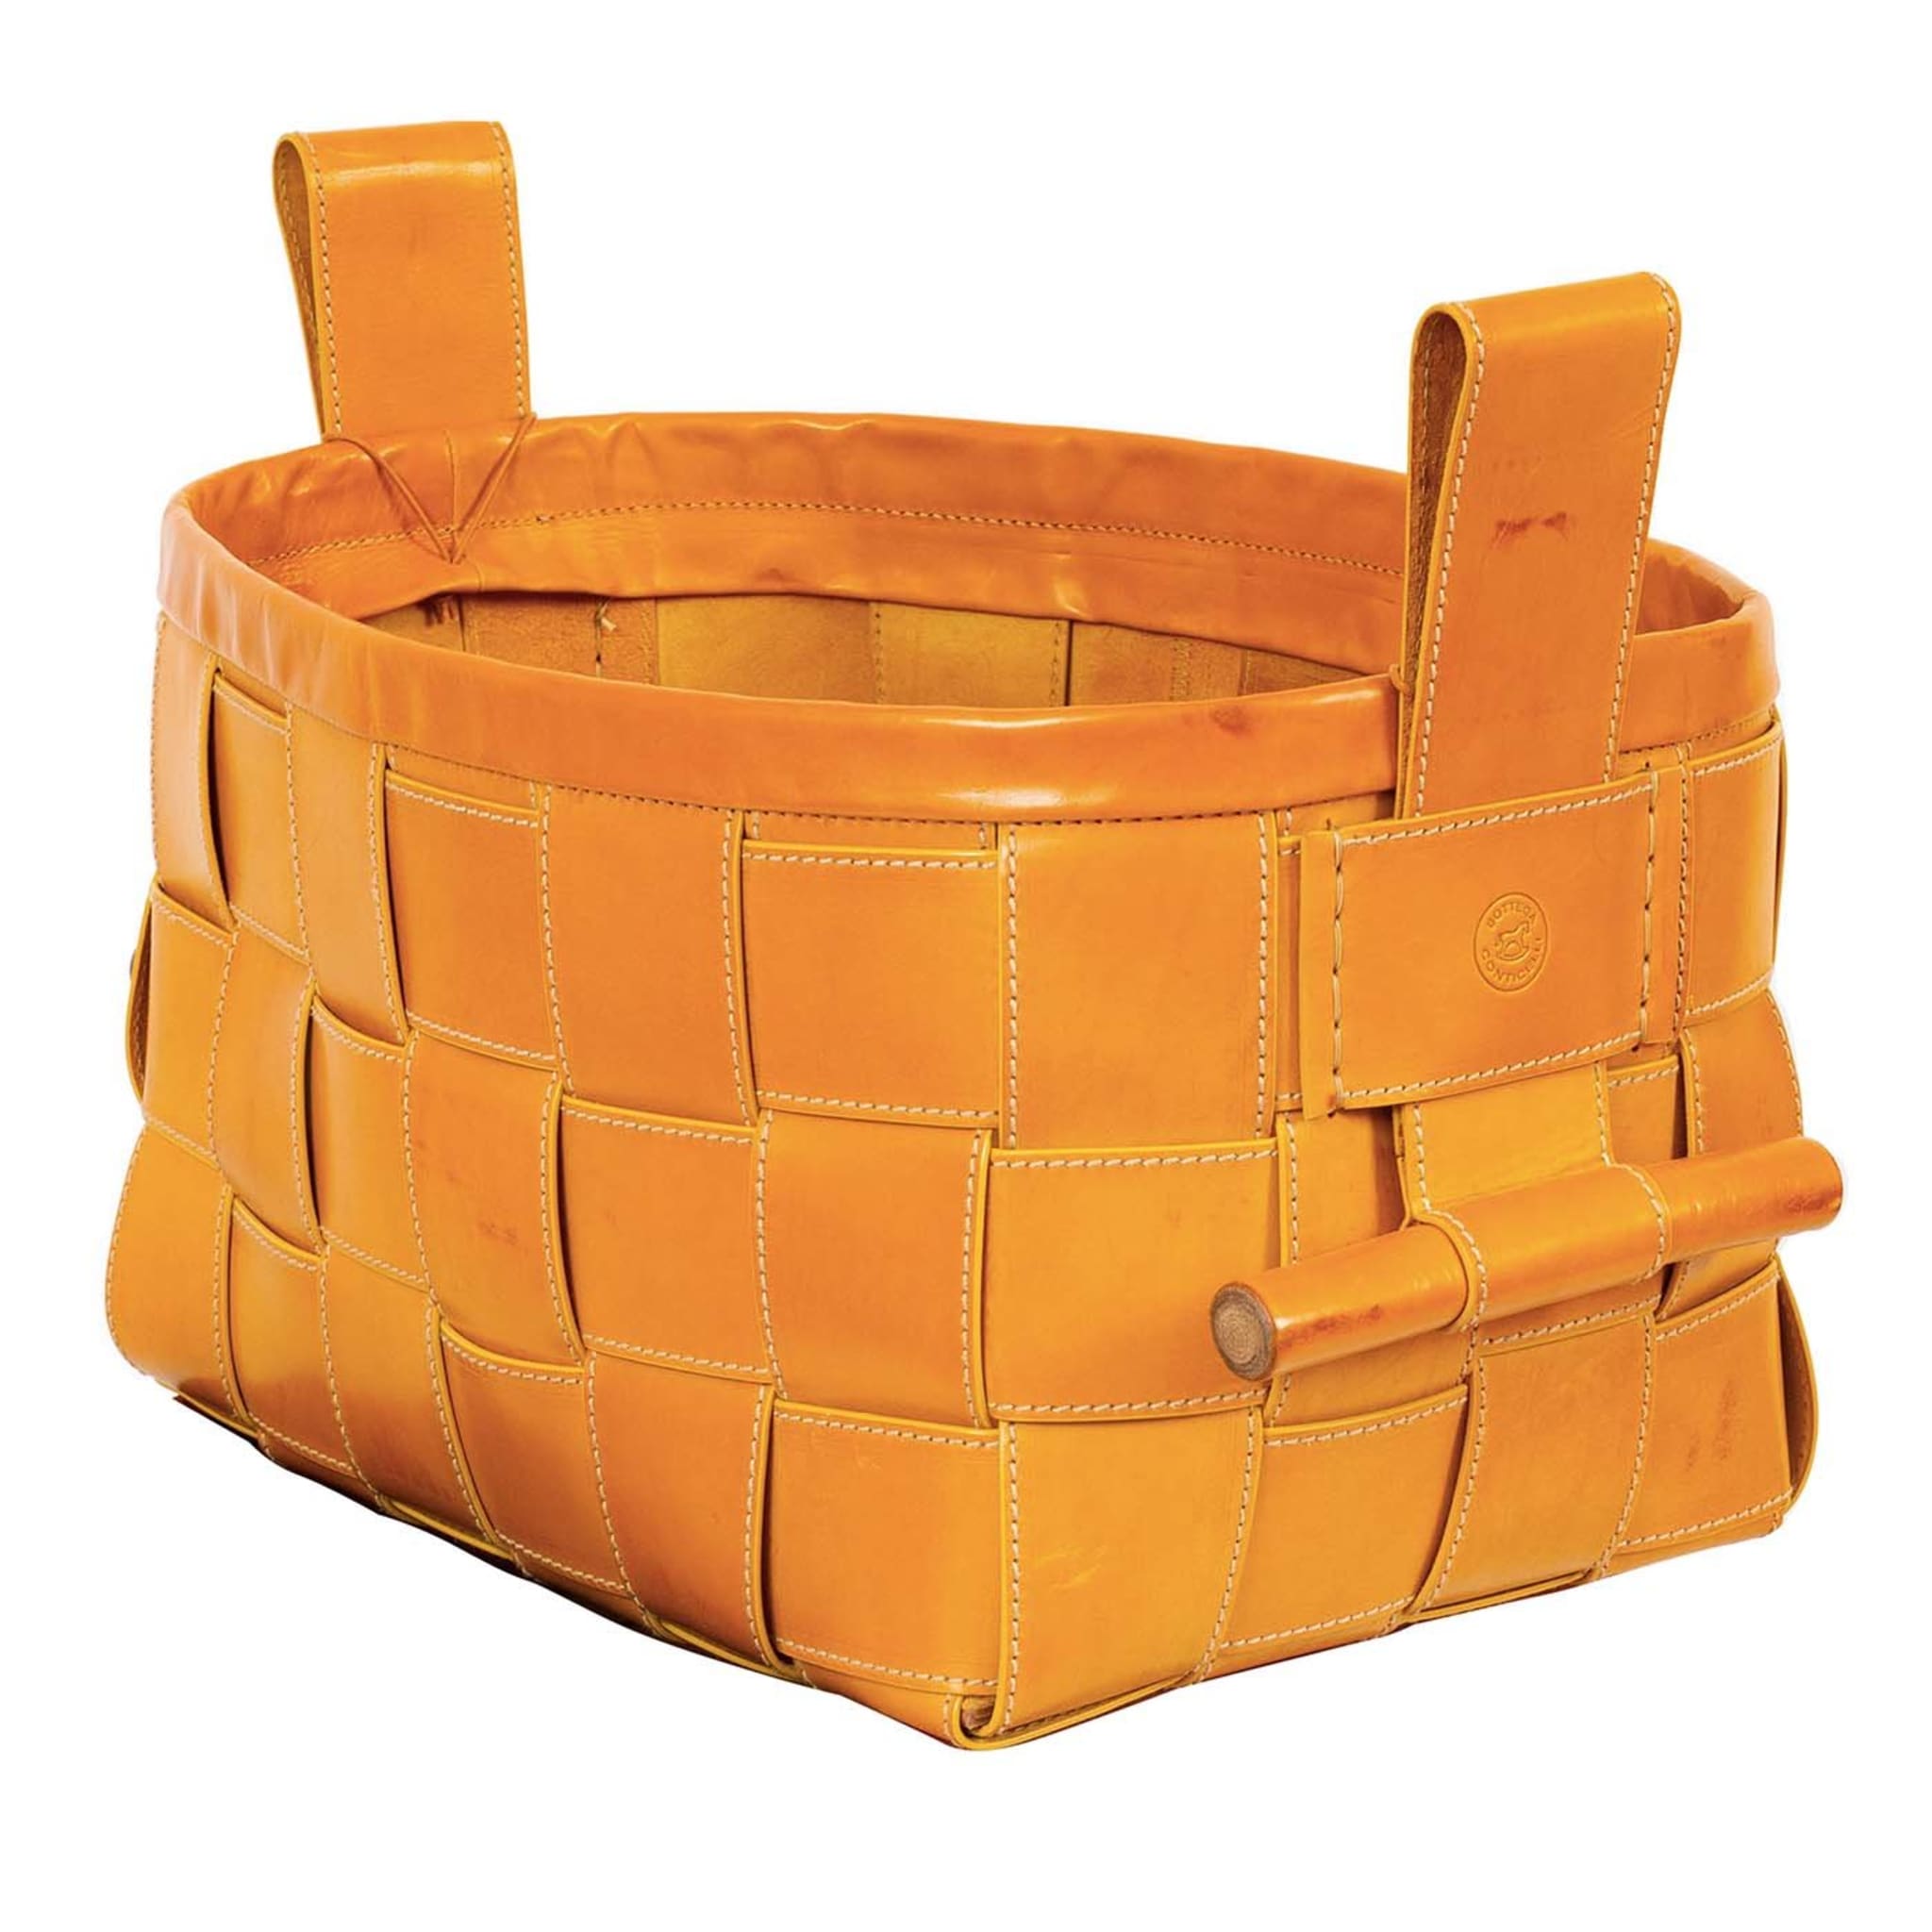 Woven Leather Basket Mustard Yellow Bottega Conticelli